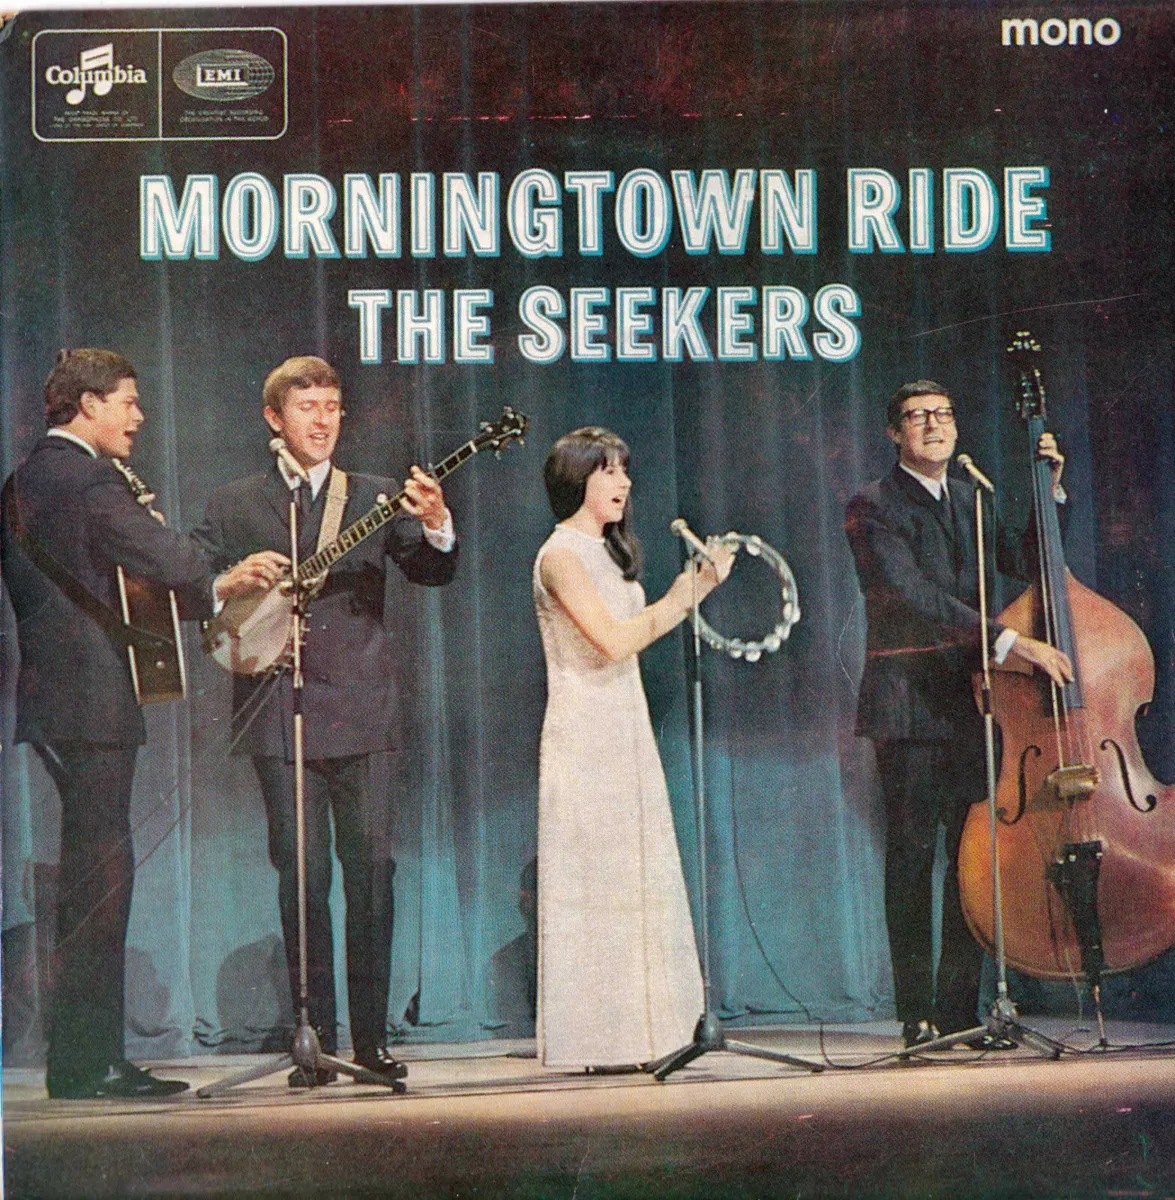 THE SEEKERS Morningtown Ride EP [1960's Columbia Mono] SirH70 | eBay